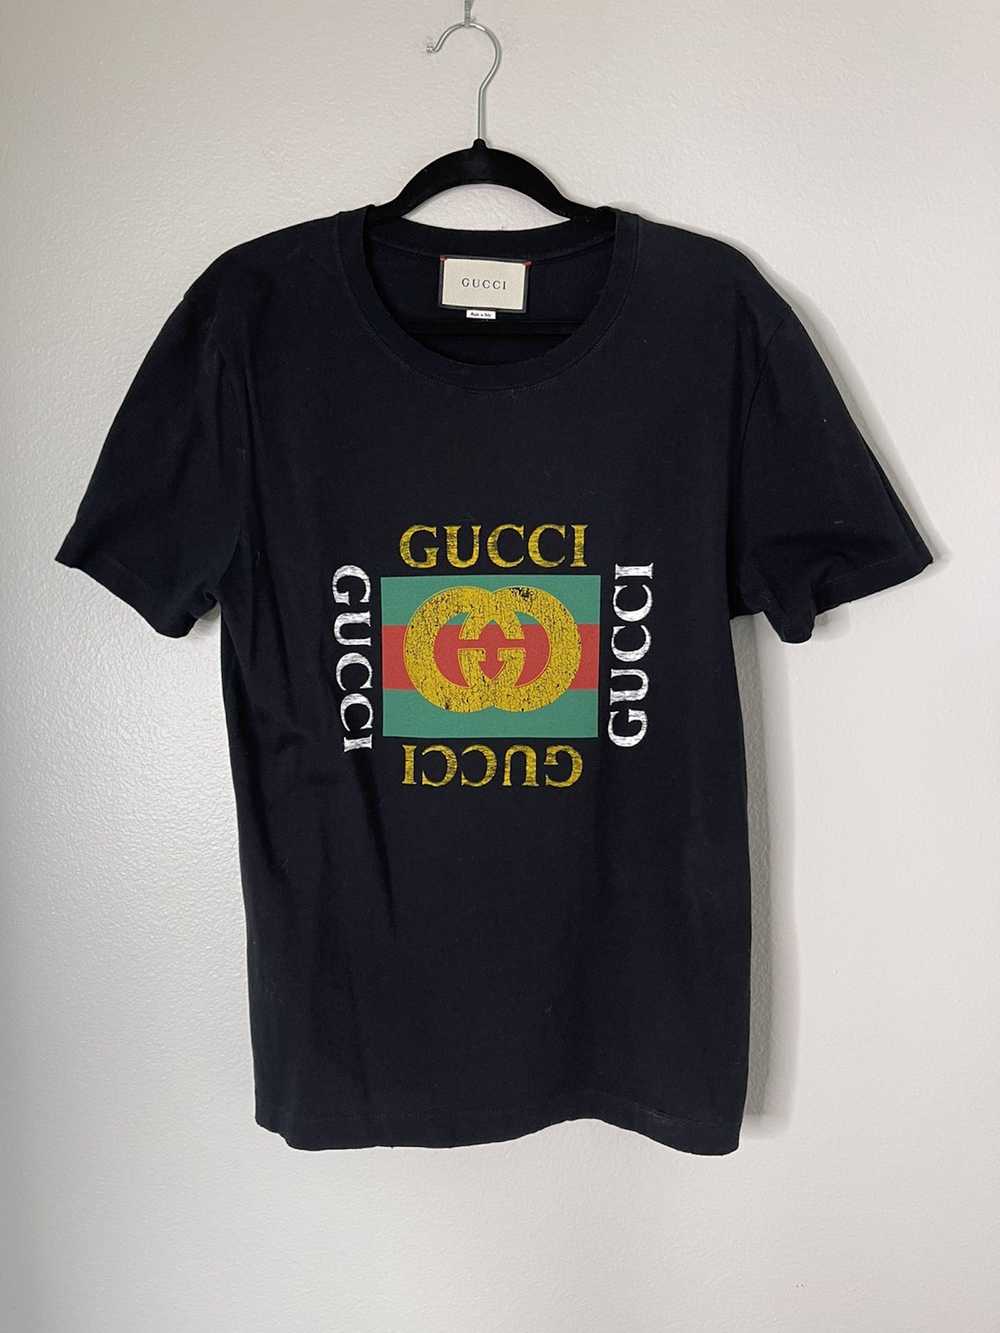 Gucci Gucci - vintage logo black t-shirt - image 3